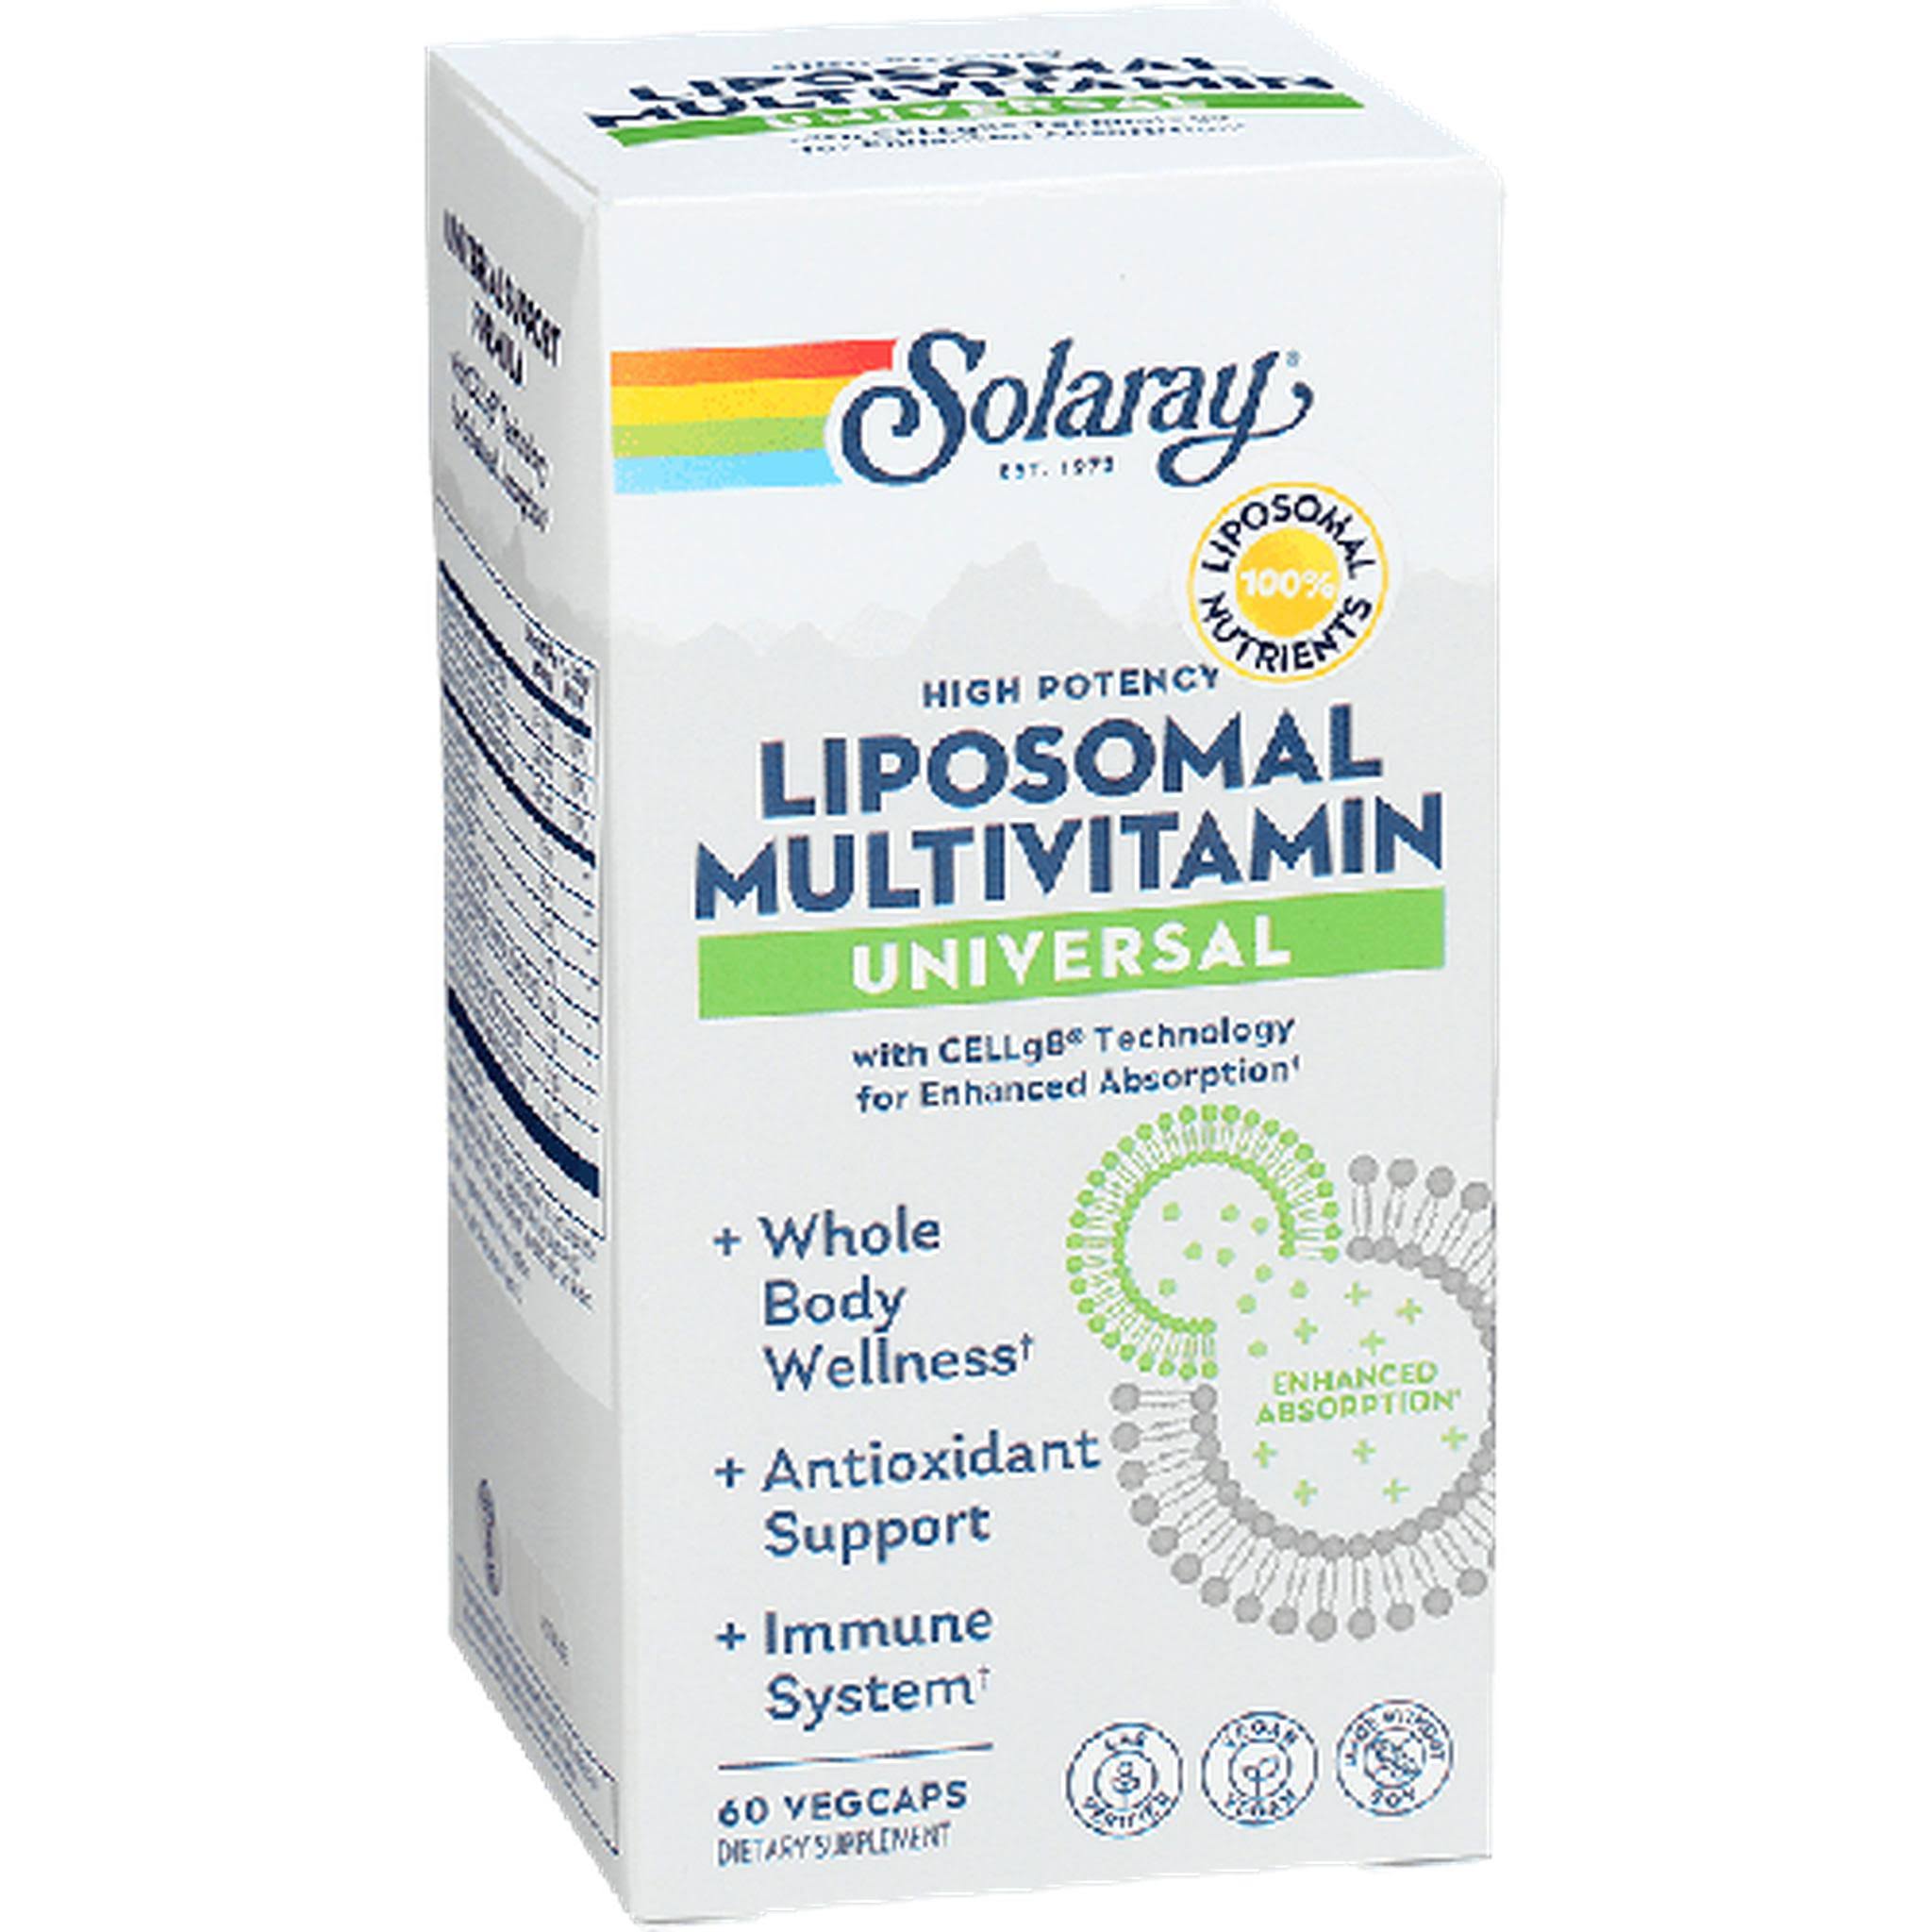 Solaray Universal Multivitamin Liposomal 60 Vegetable Capsules